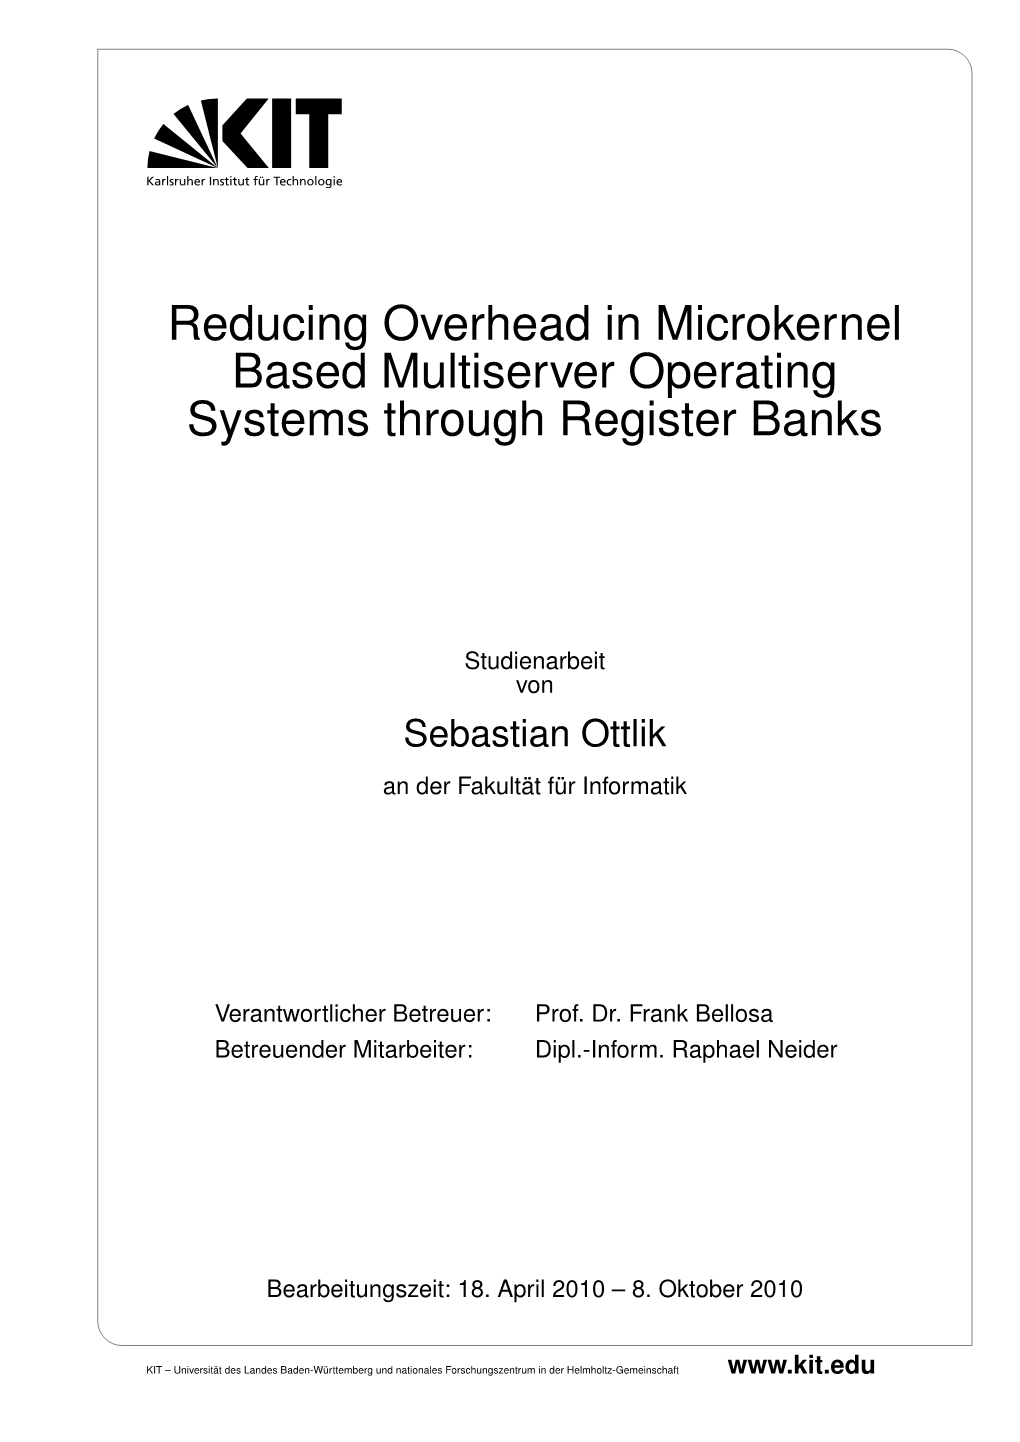 Reducing Overhead in Microkernel Based Multiserver Operating Systems Through Register Banks